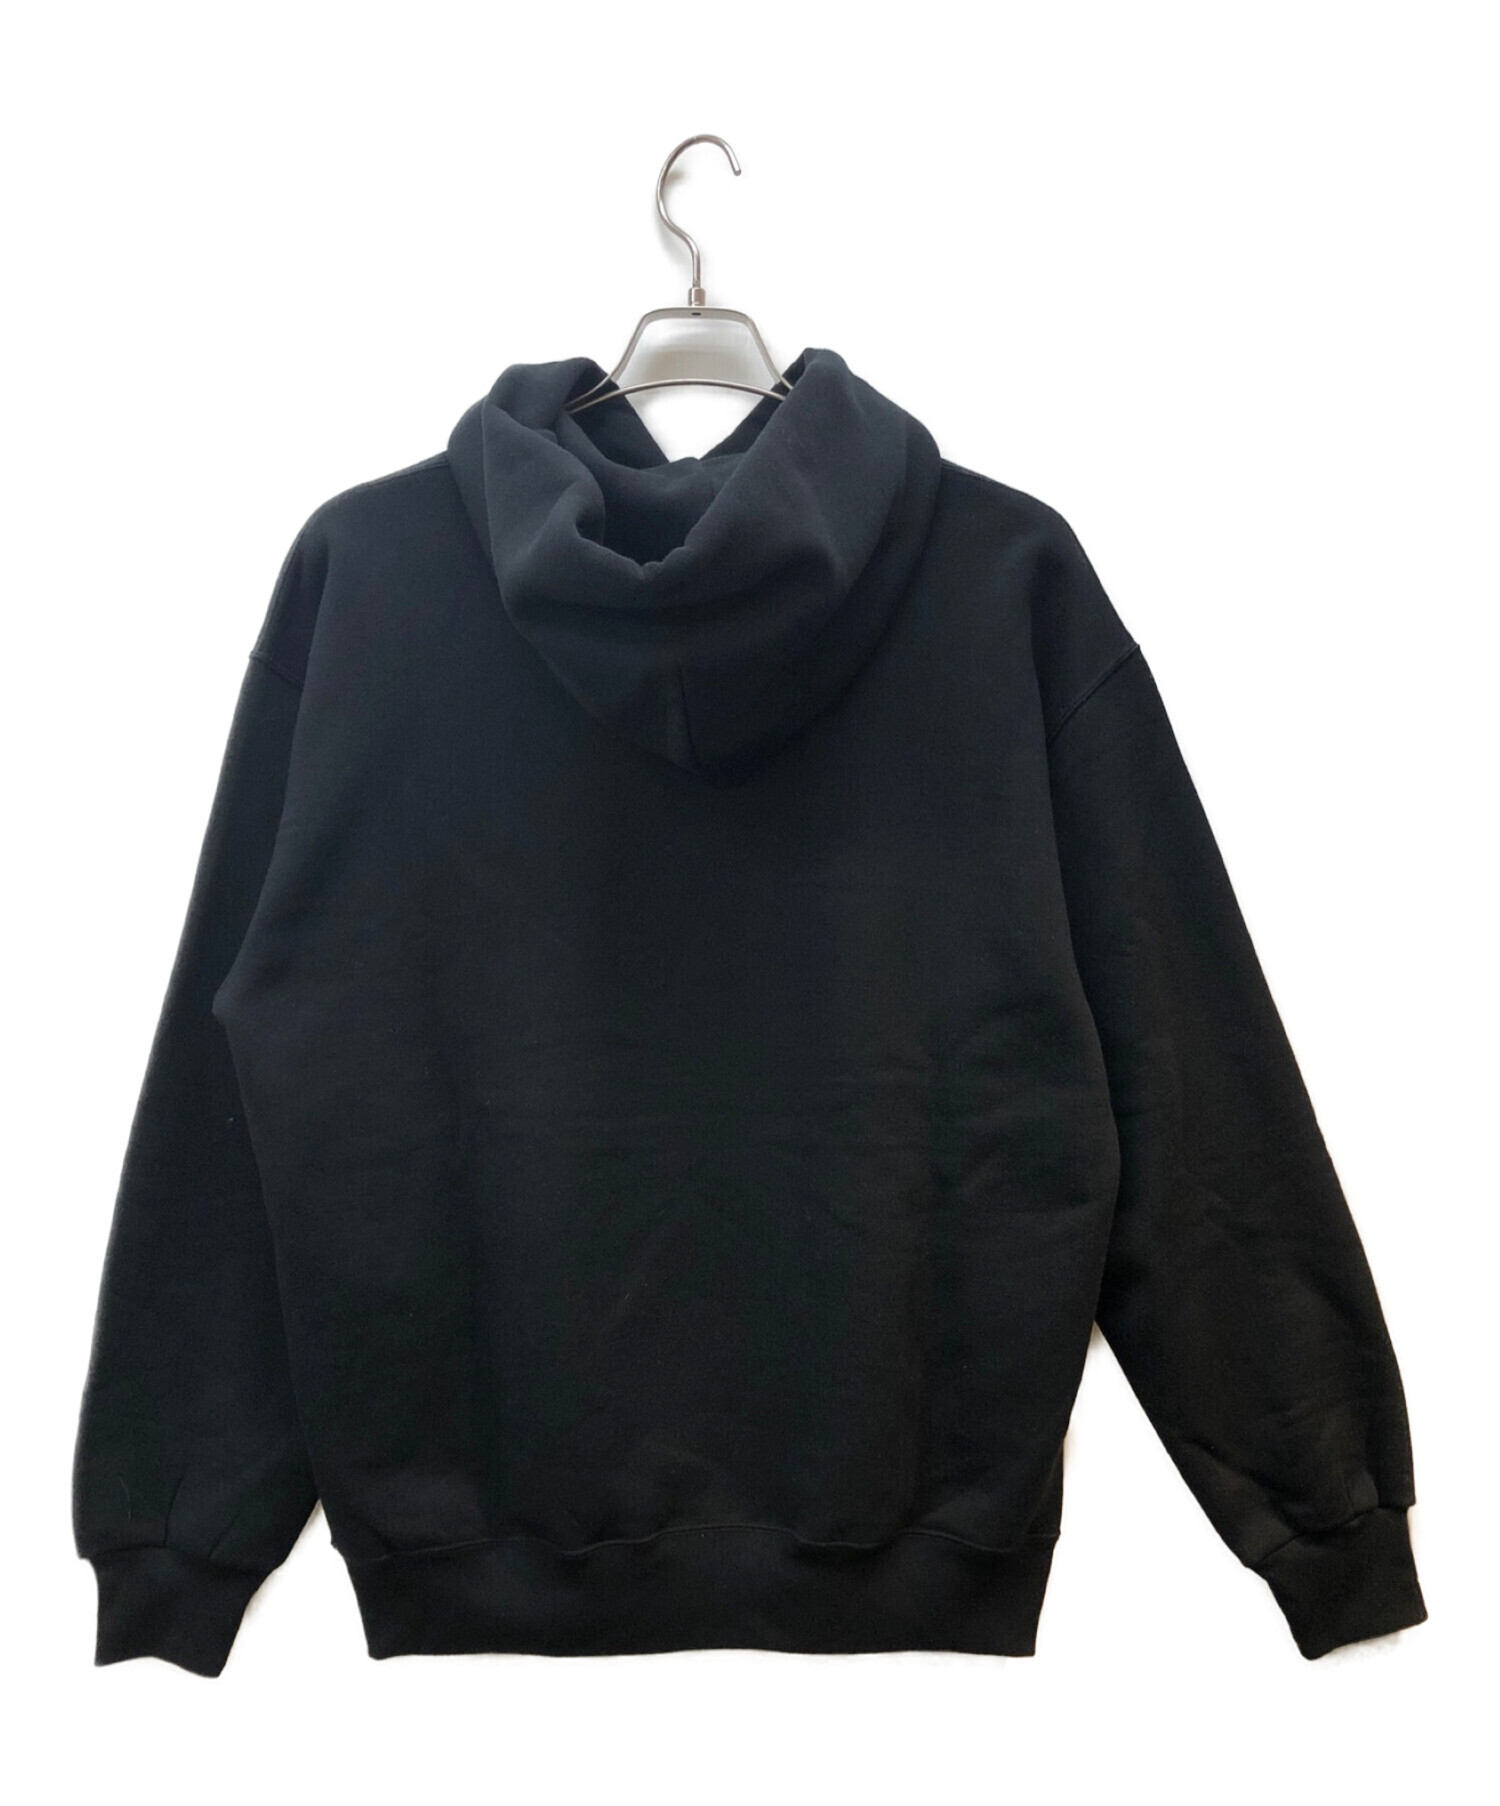 ennoy hoodie gray Lサイズ 最終価格!!